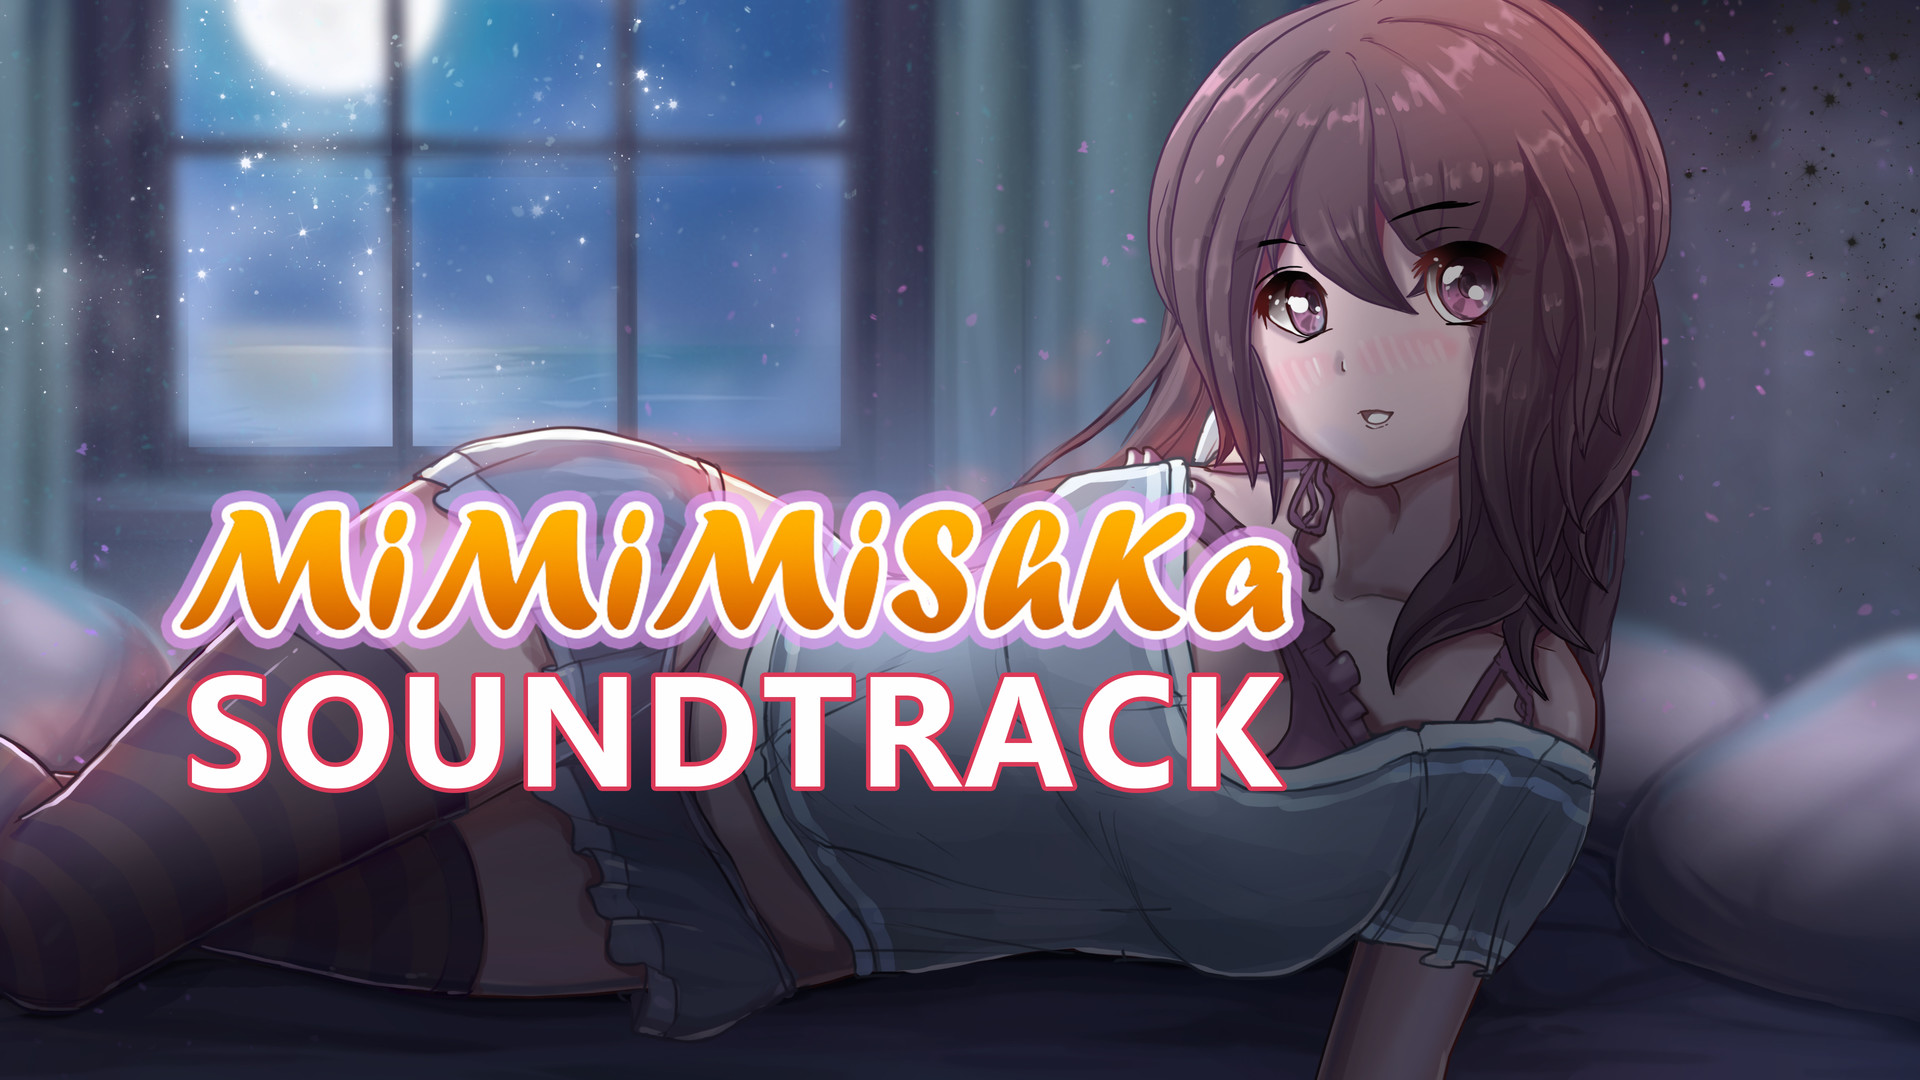 MiMiMiShKa - Soundtrack Featured Screenshot #1